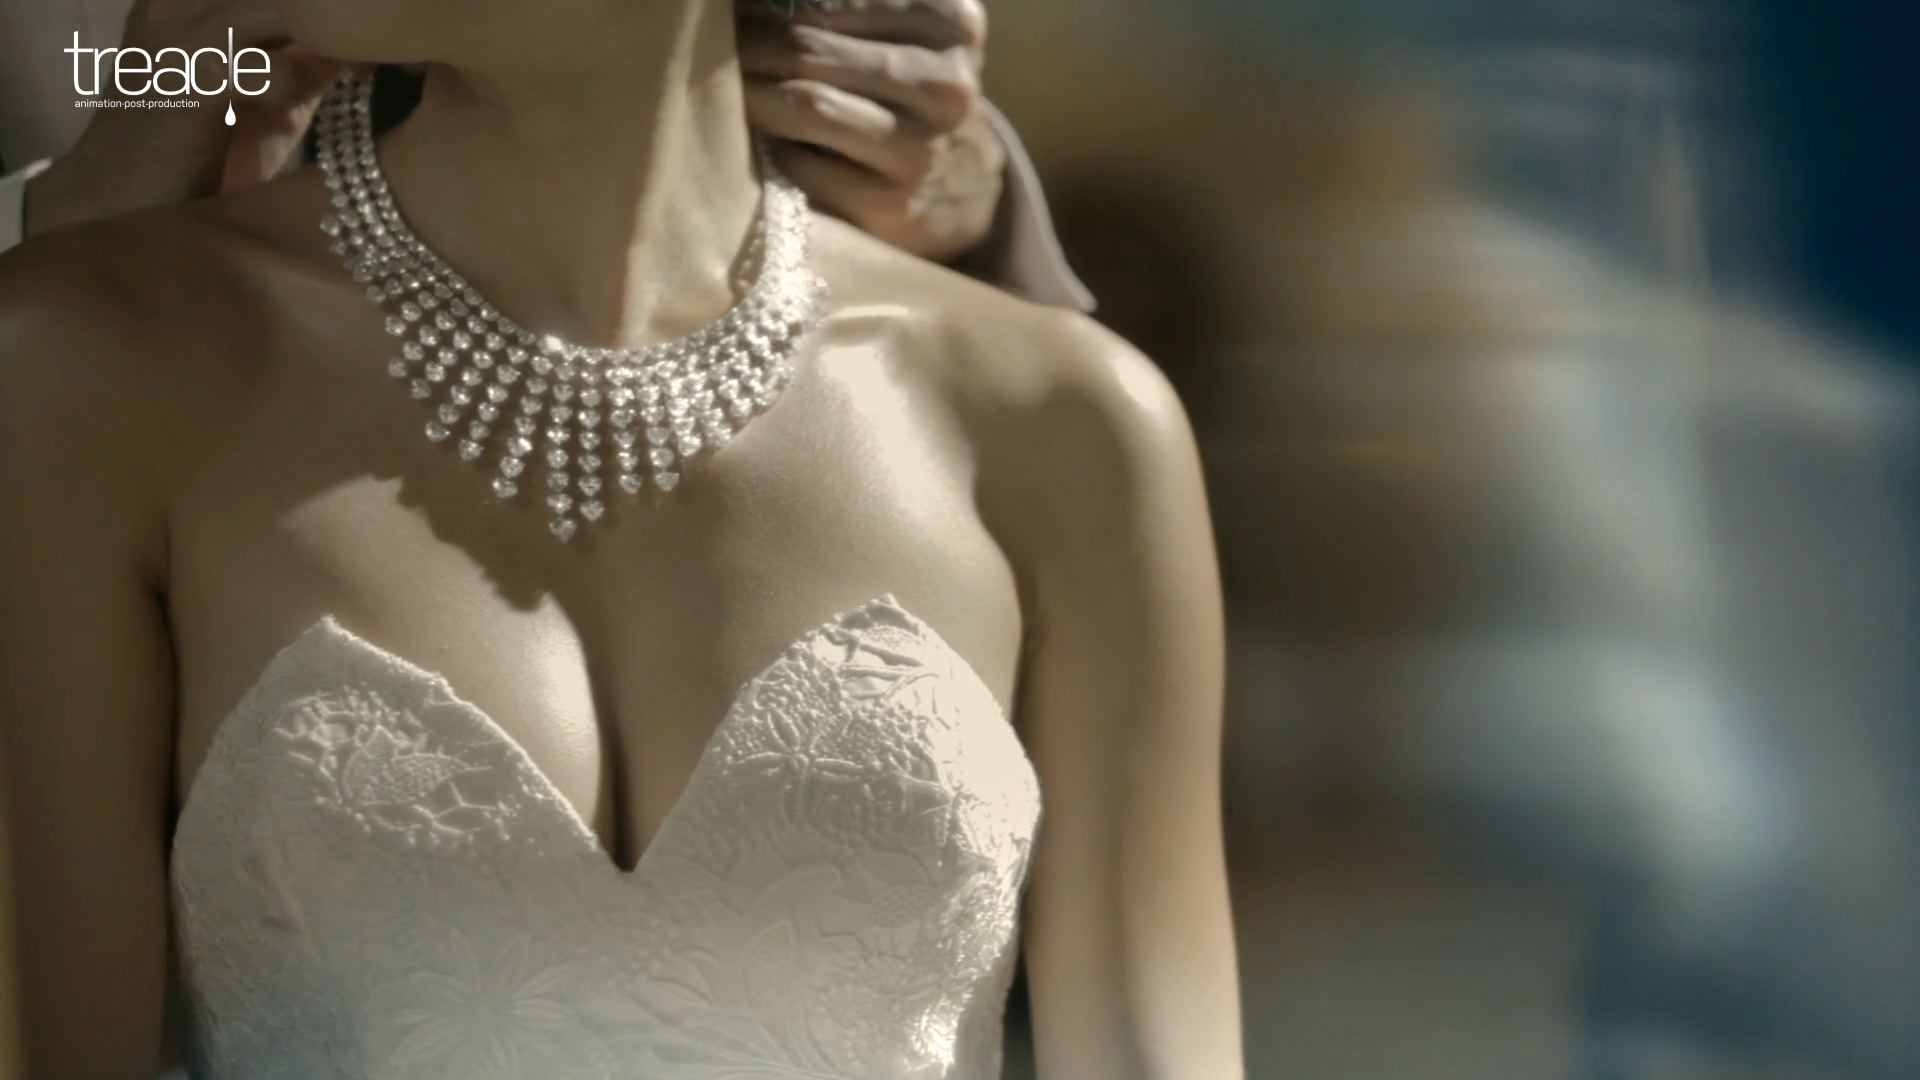 A bride wears an elegant diamond necklace